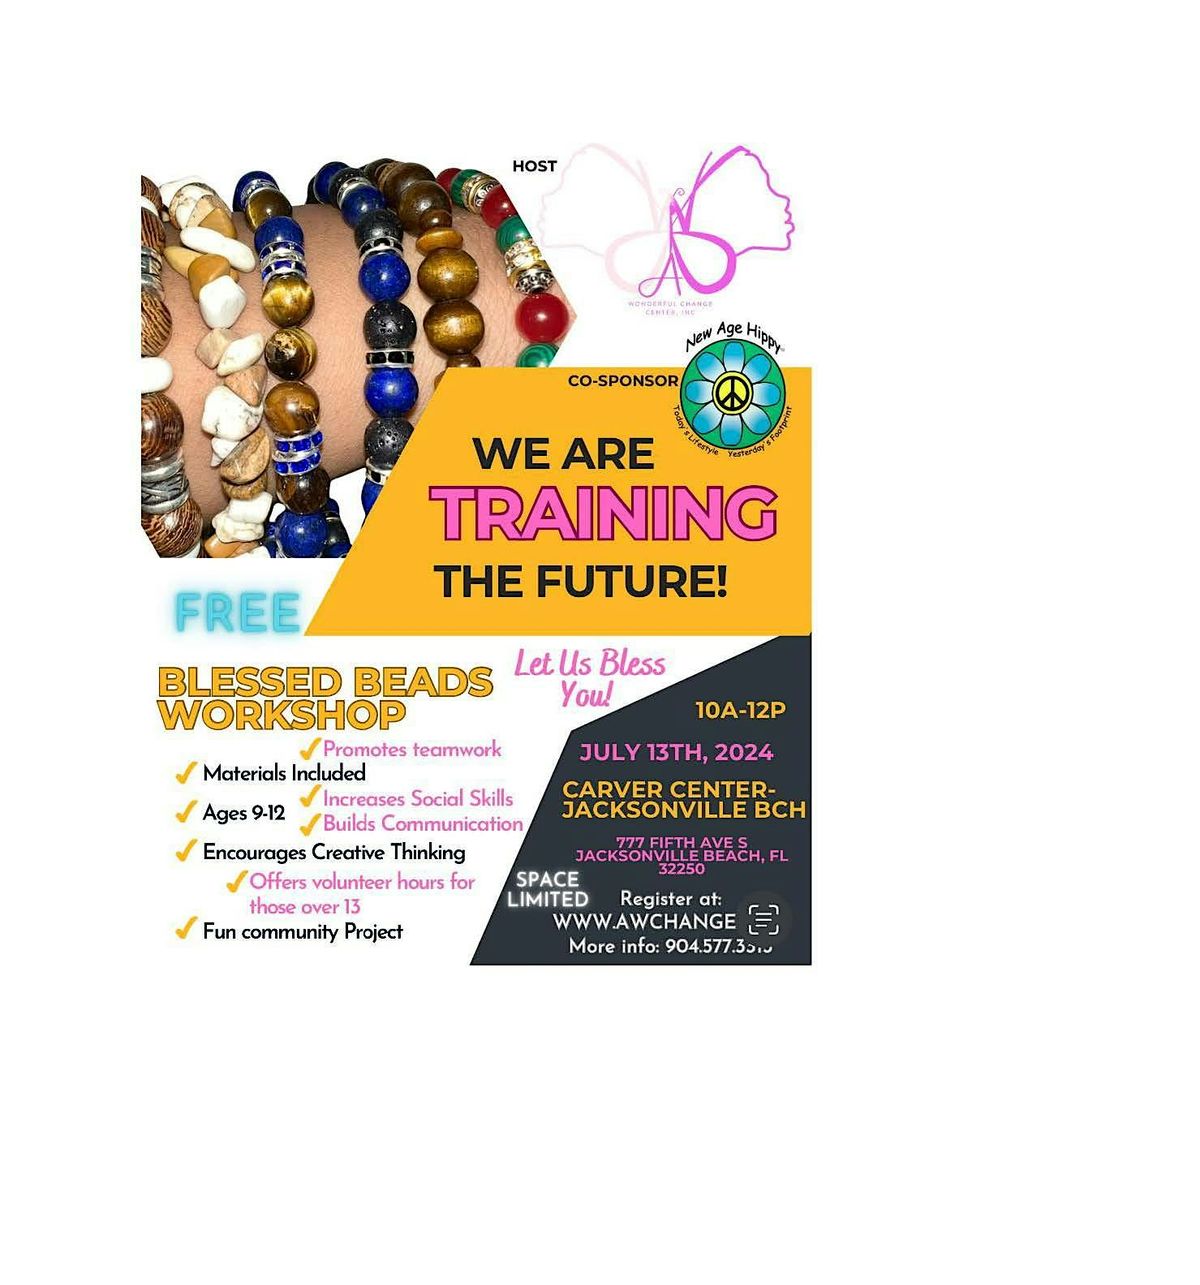 FREE Children's Beads (Jewelery Making) Workshop